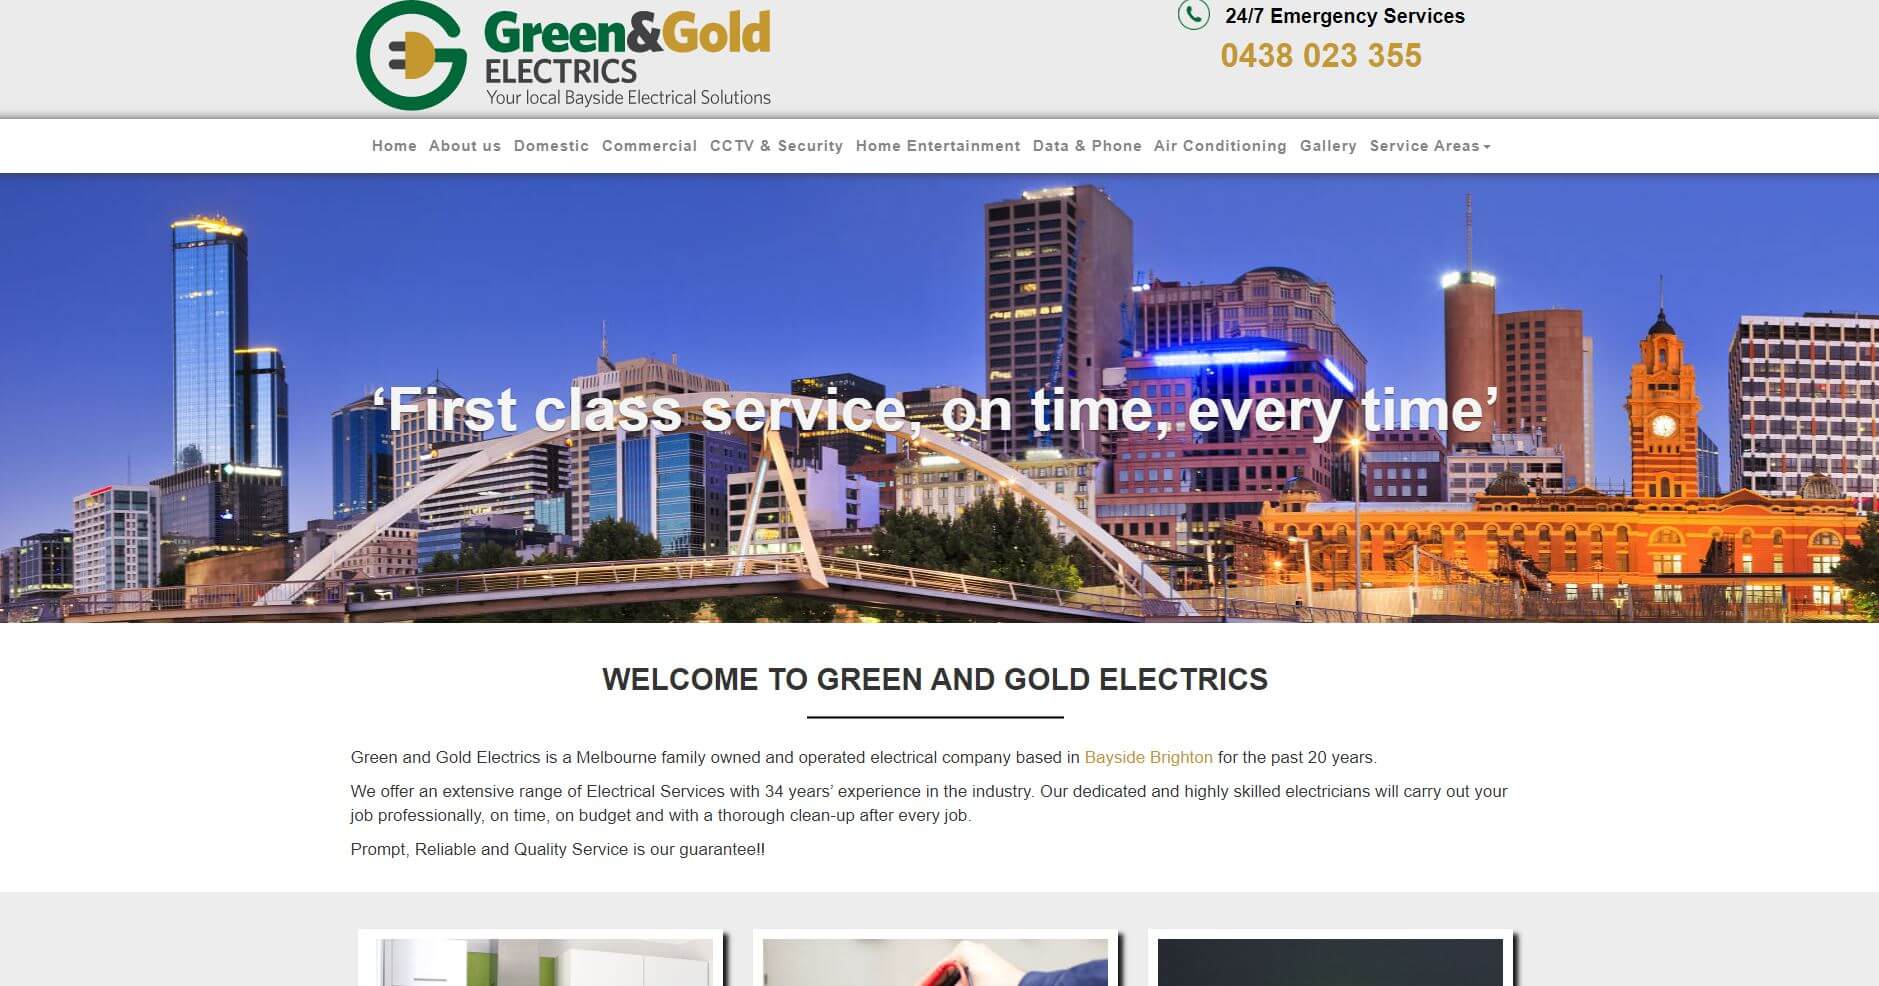 Green & Gold Electrics